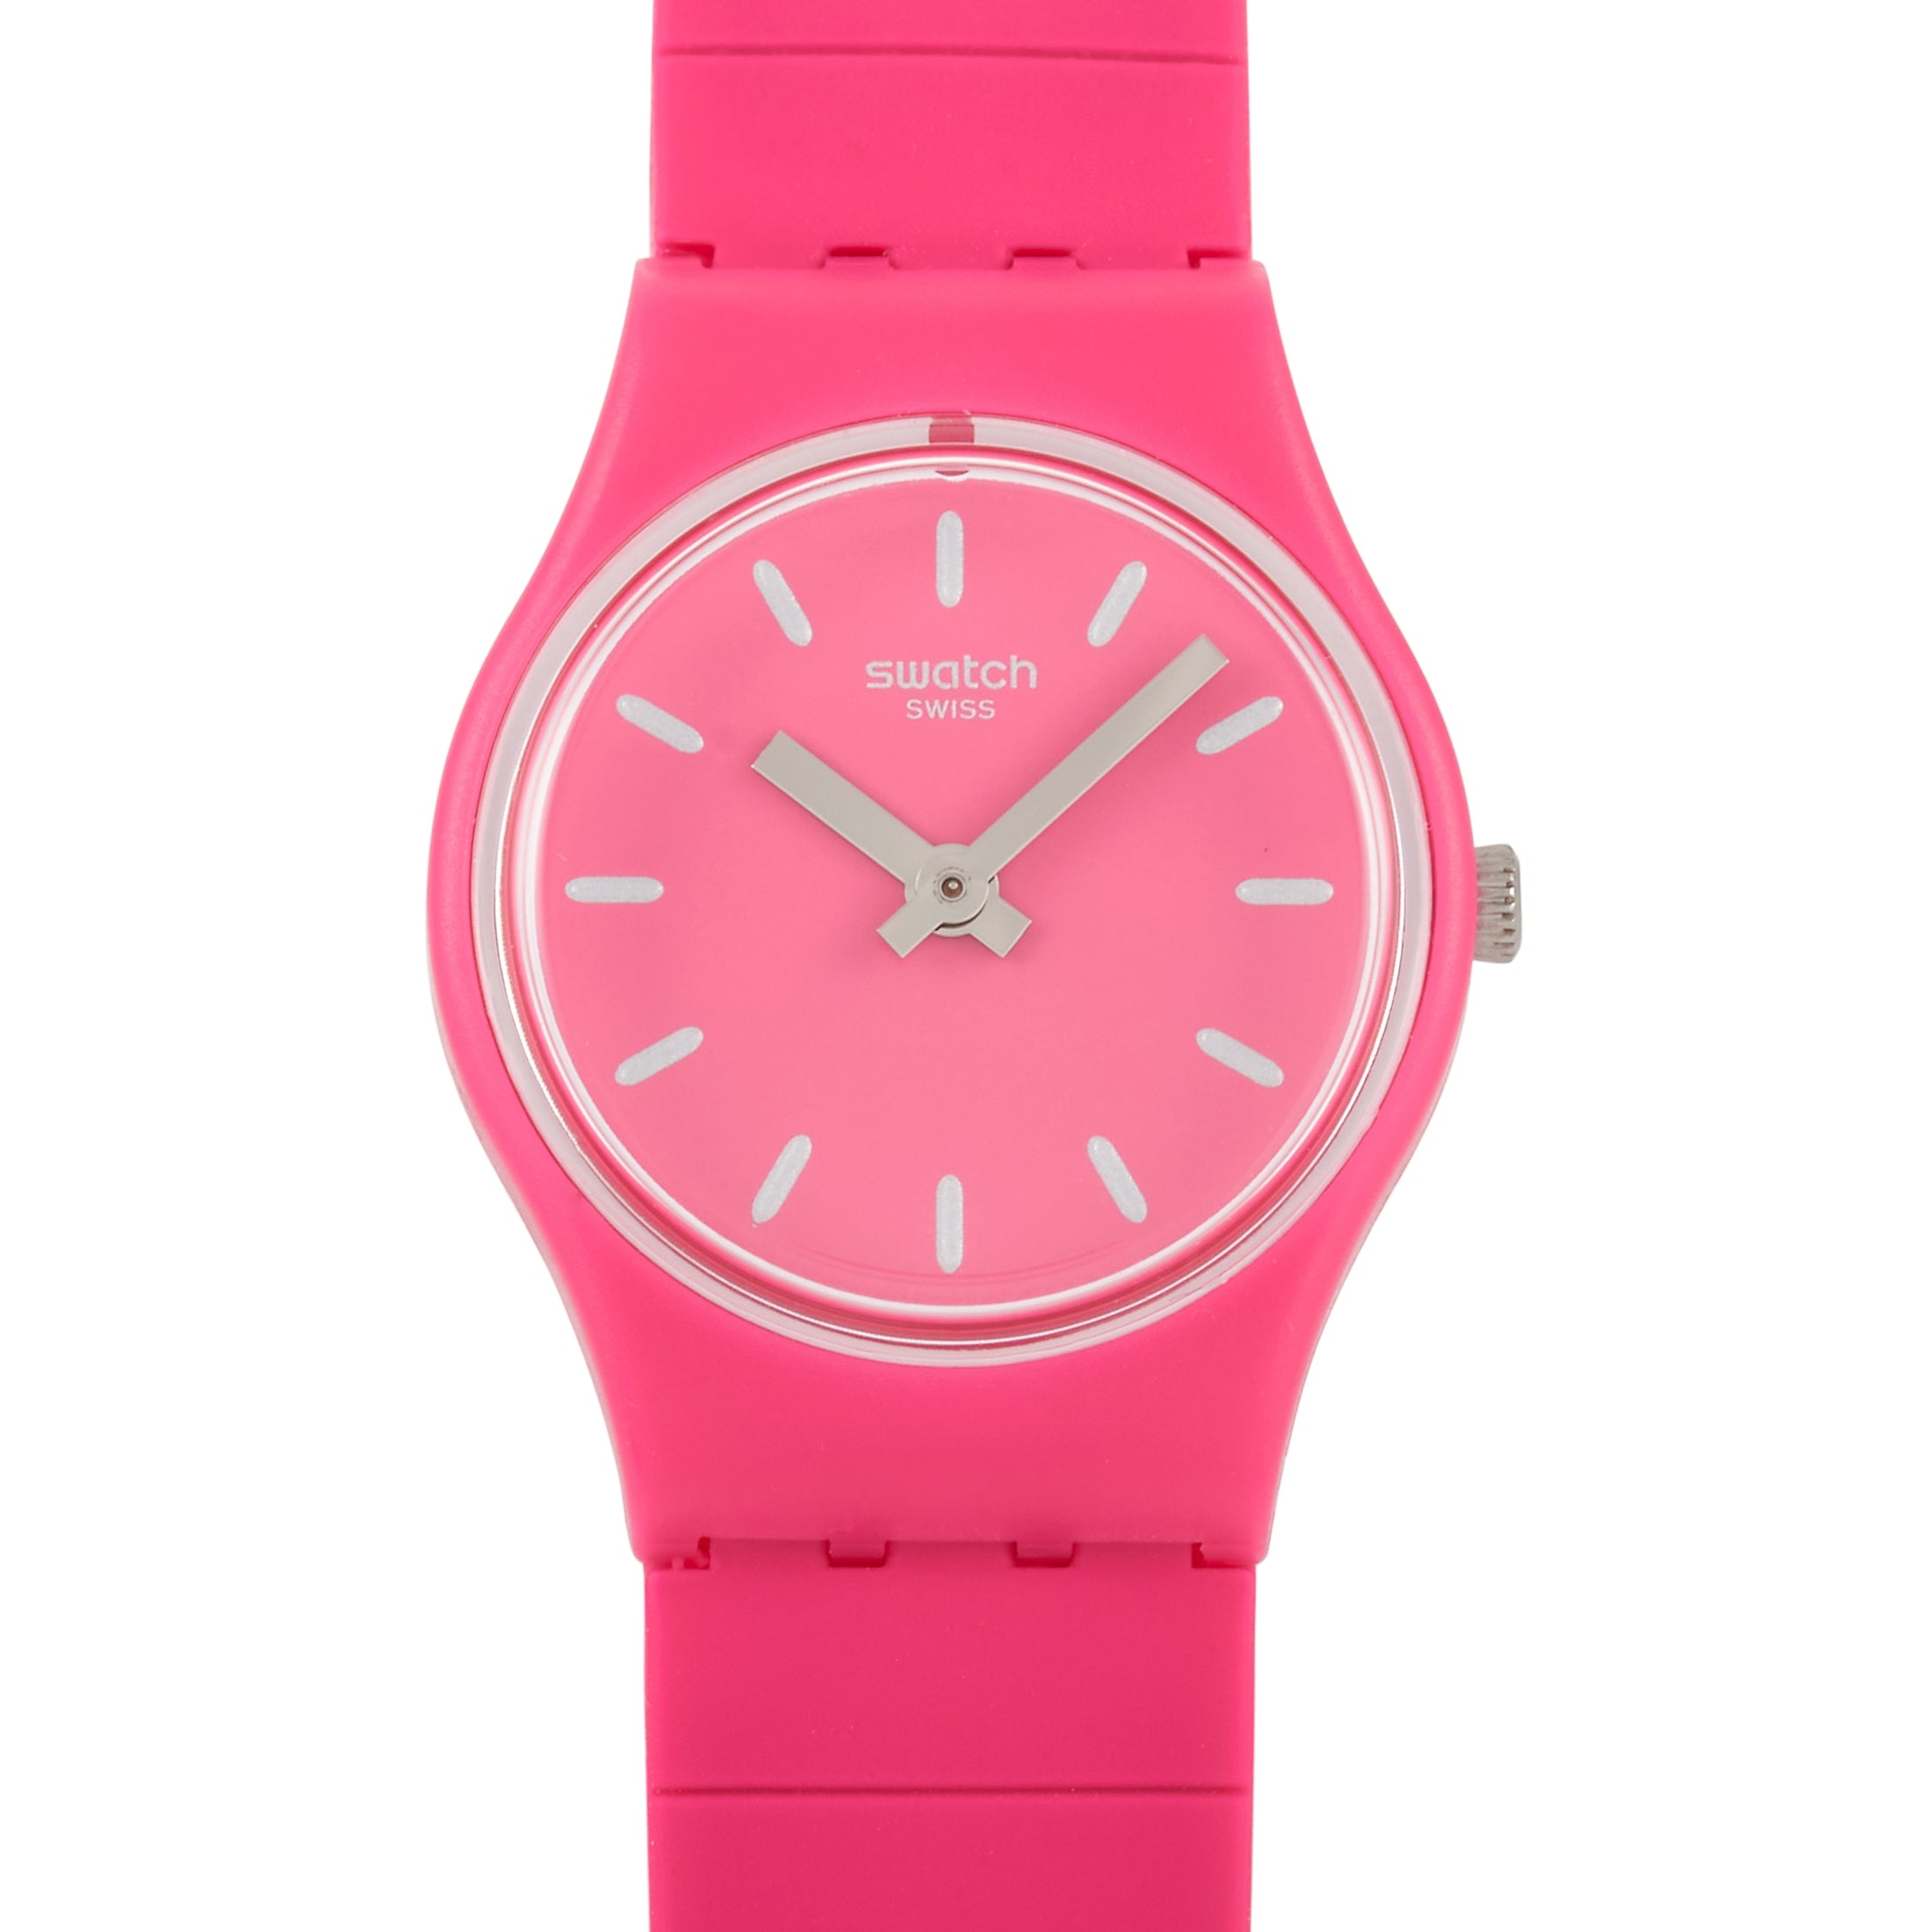 Swatch Color Studio Flexipink 25mm Ladies' Watch LP149B female